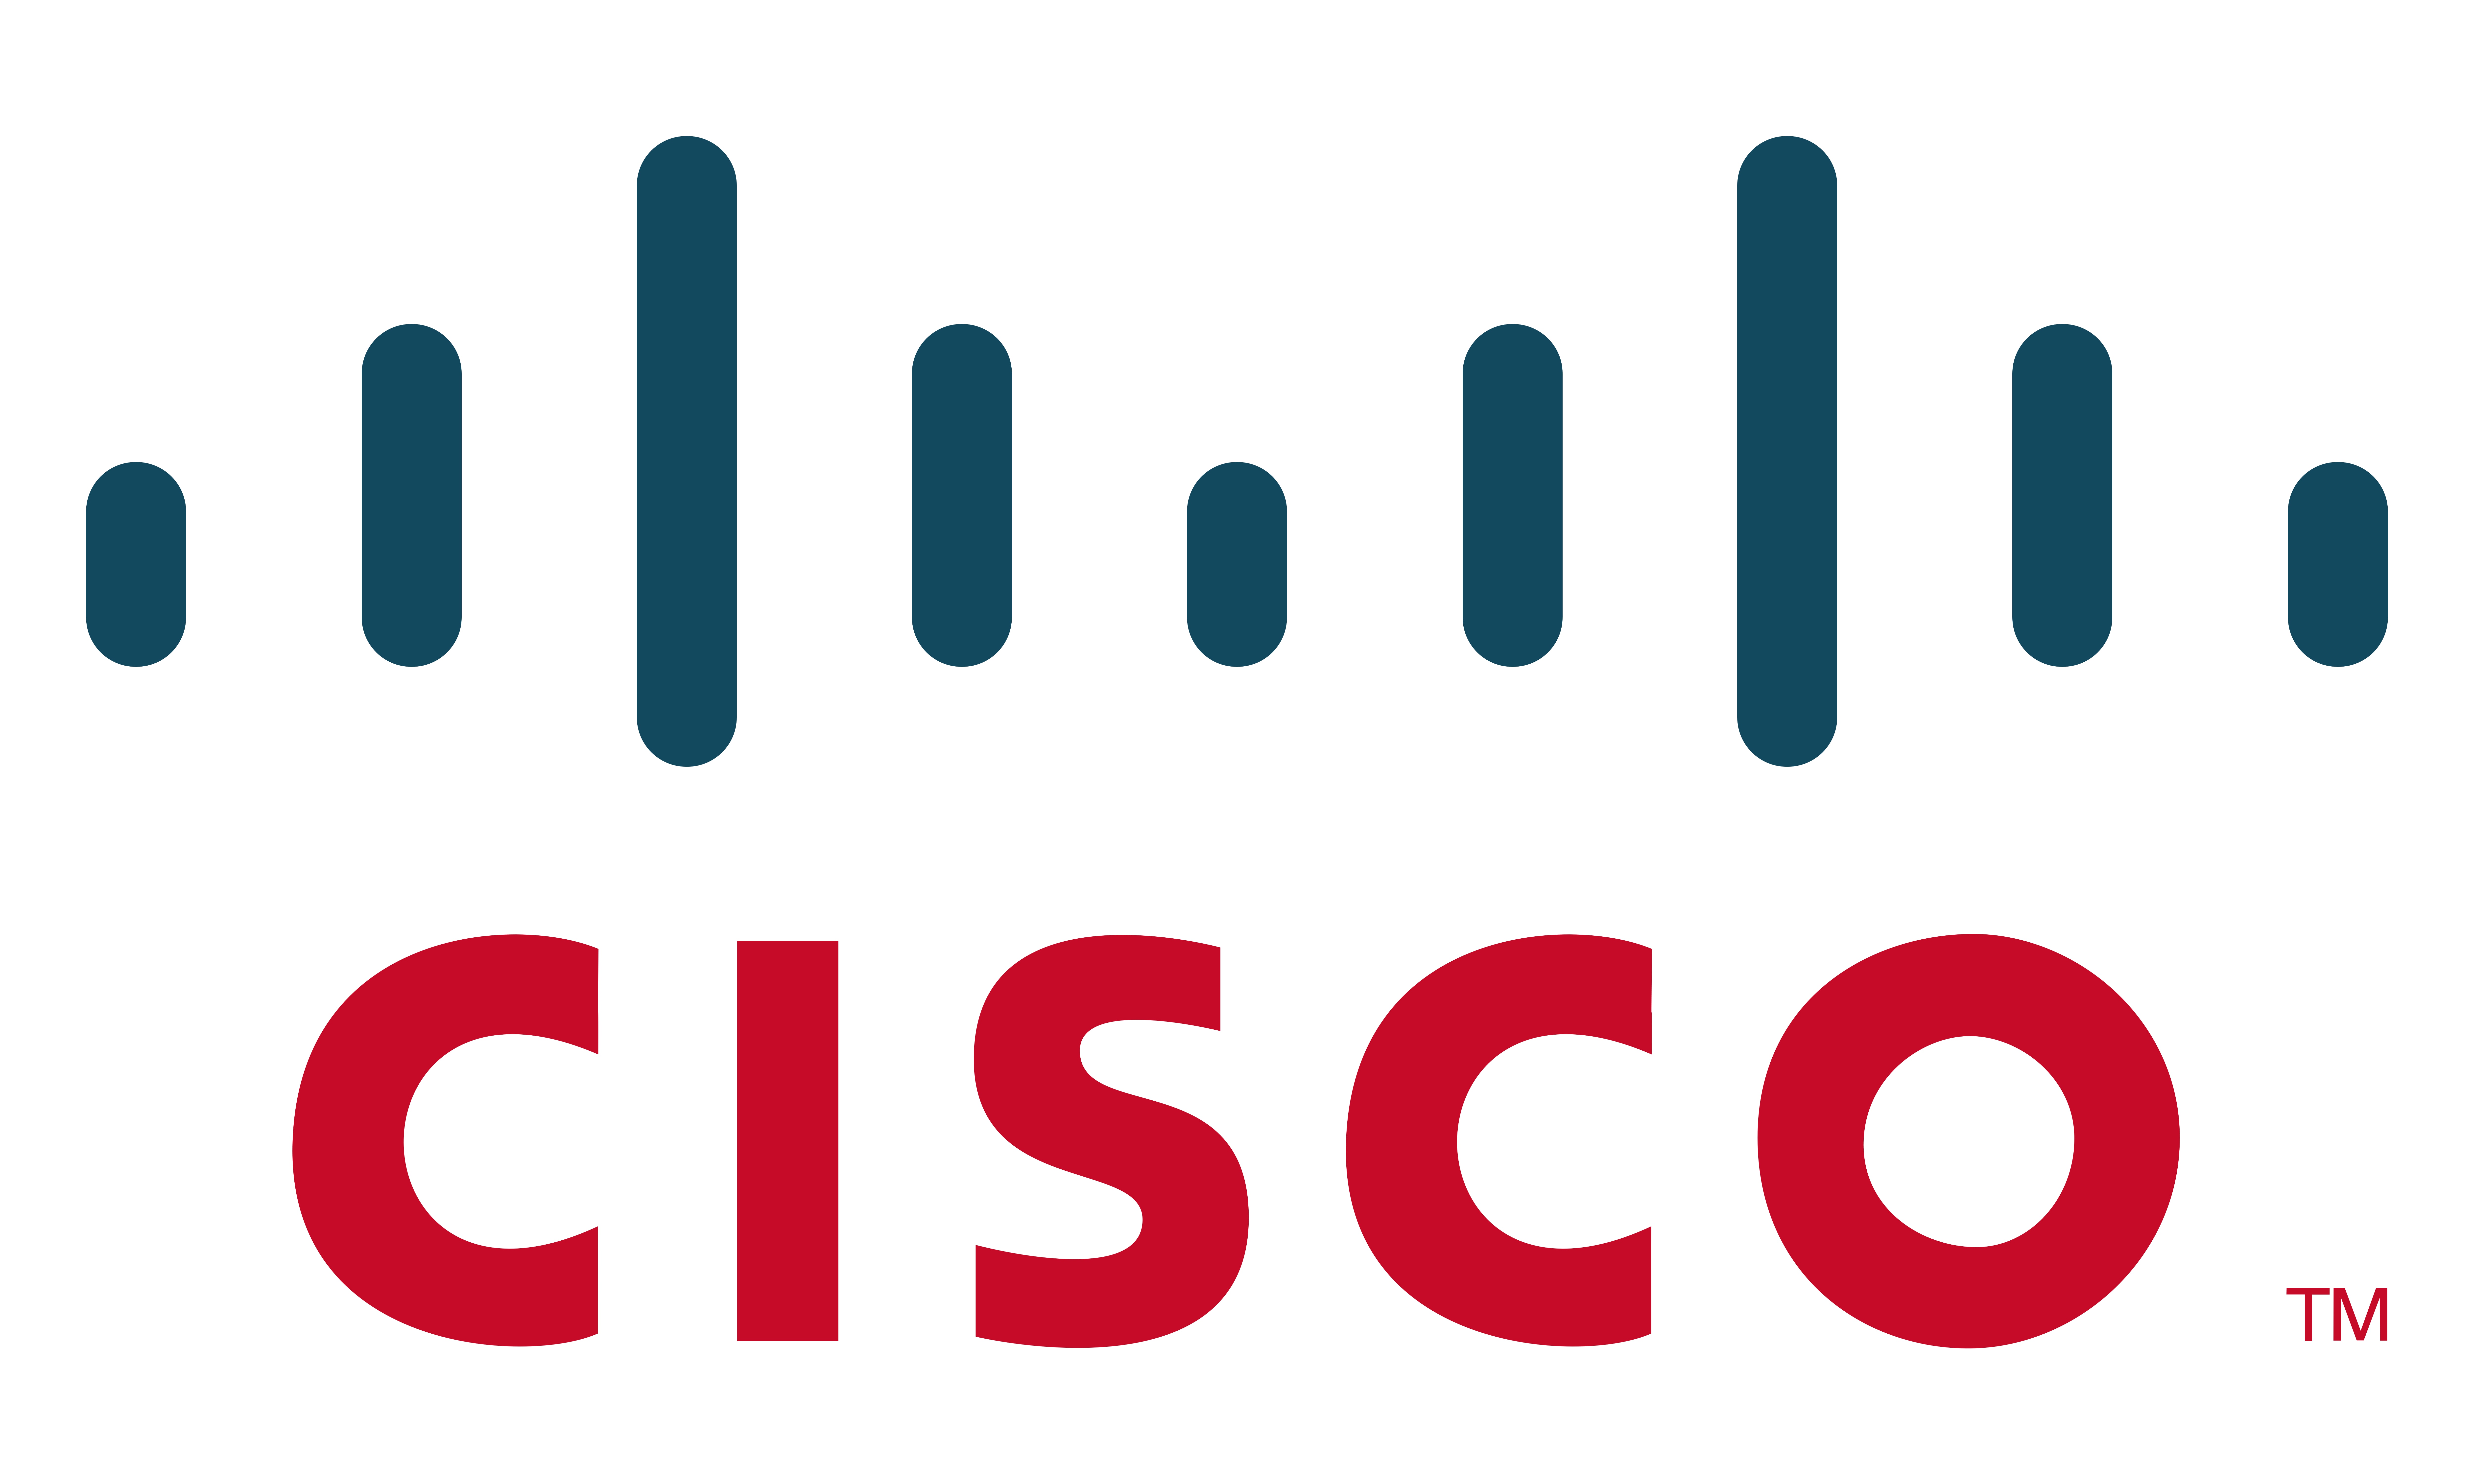 Cisco systems